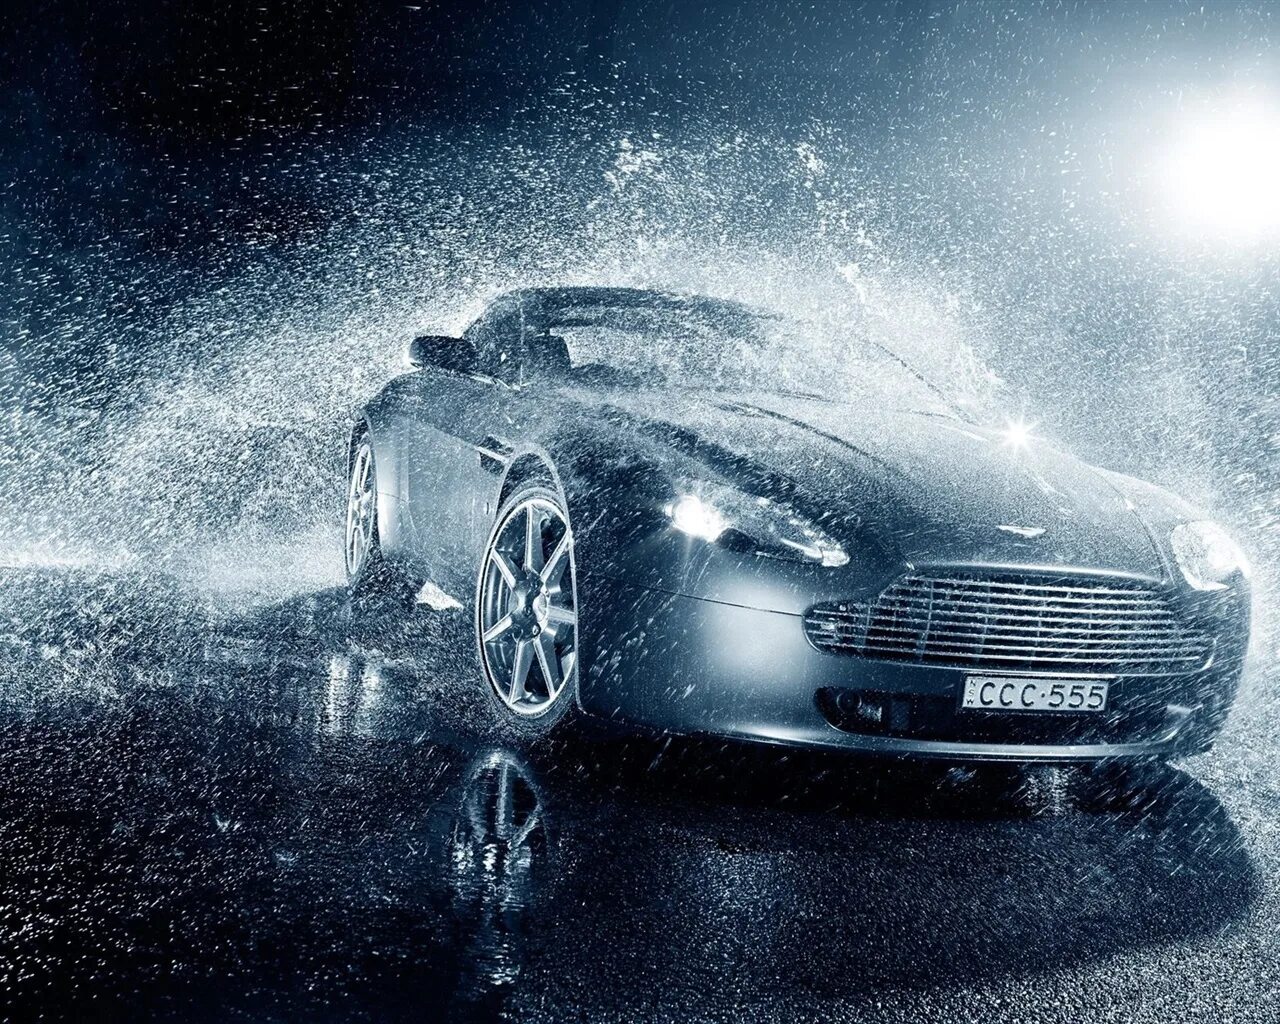 I have my car washed. Мойка автомобиля. Машина в брызгах. Авто в брызгах воды. Автомобиль брызги.